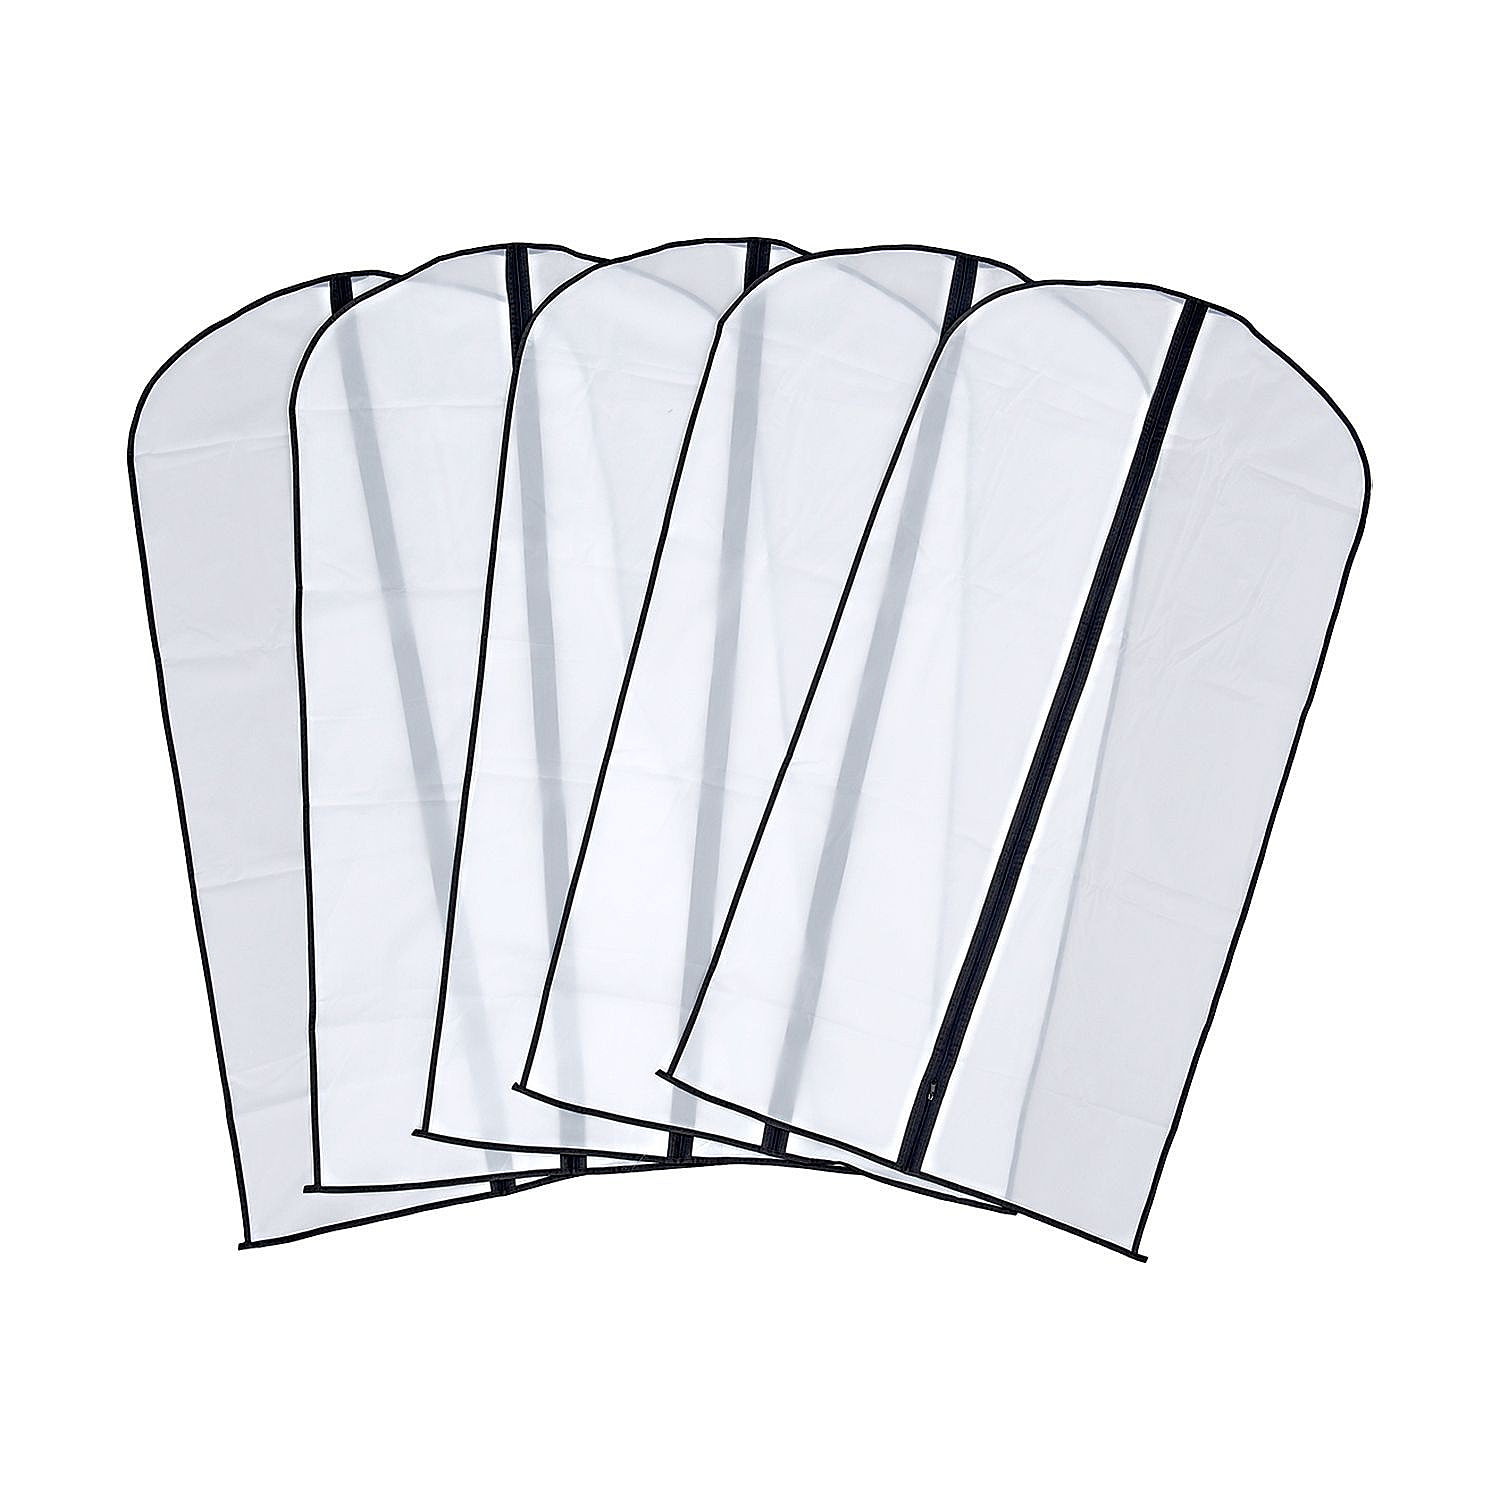 Set of 5 - Dustproof Garment Bag with Zipper (Size 120x60cm) - White